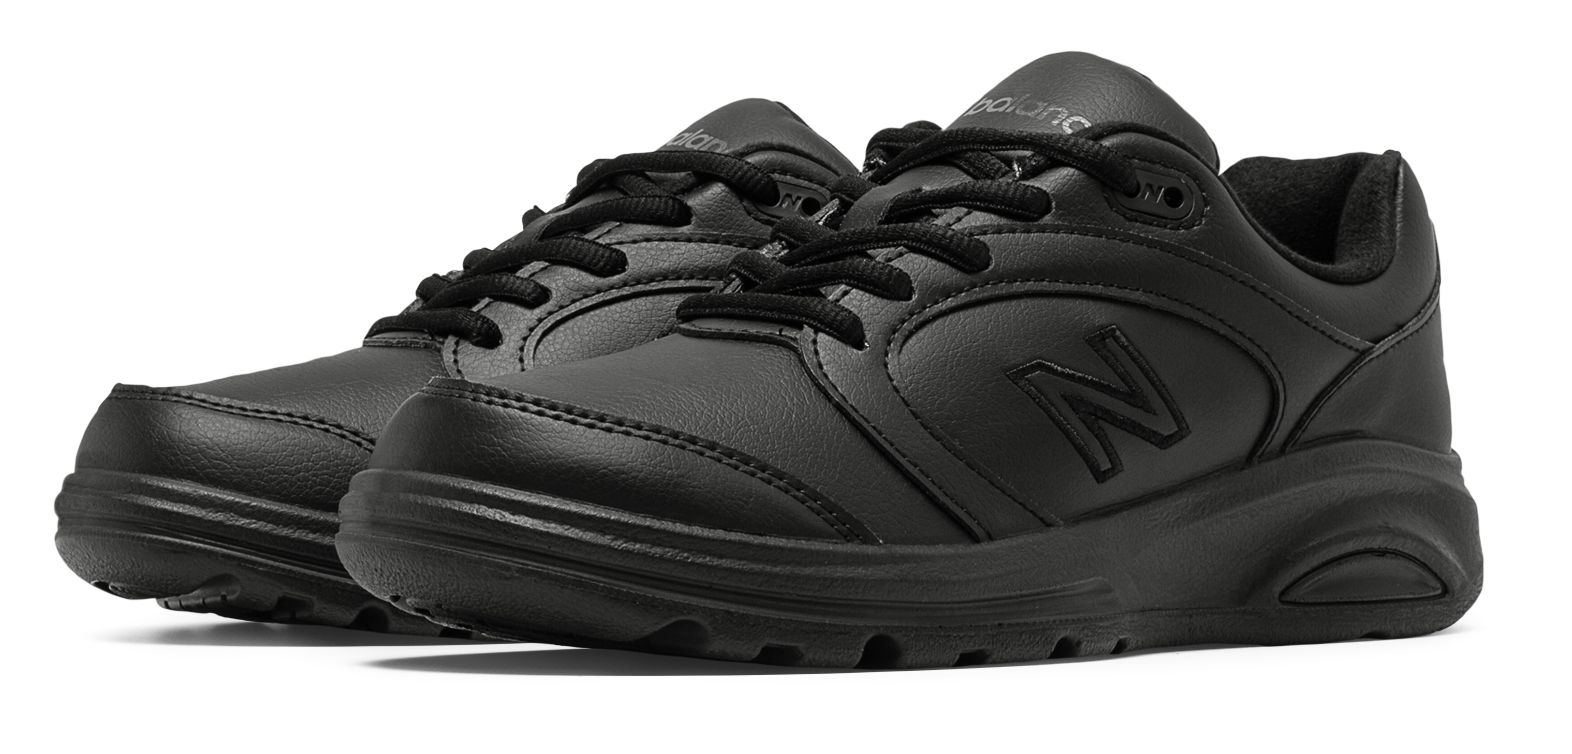 New Balance Womens Walking 674 Shoes Black | eBay